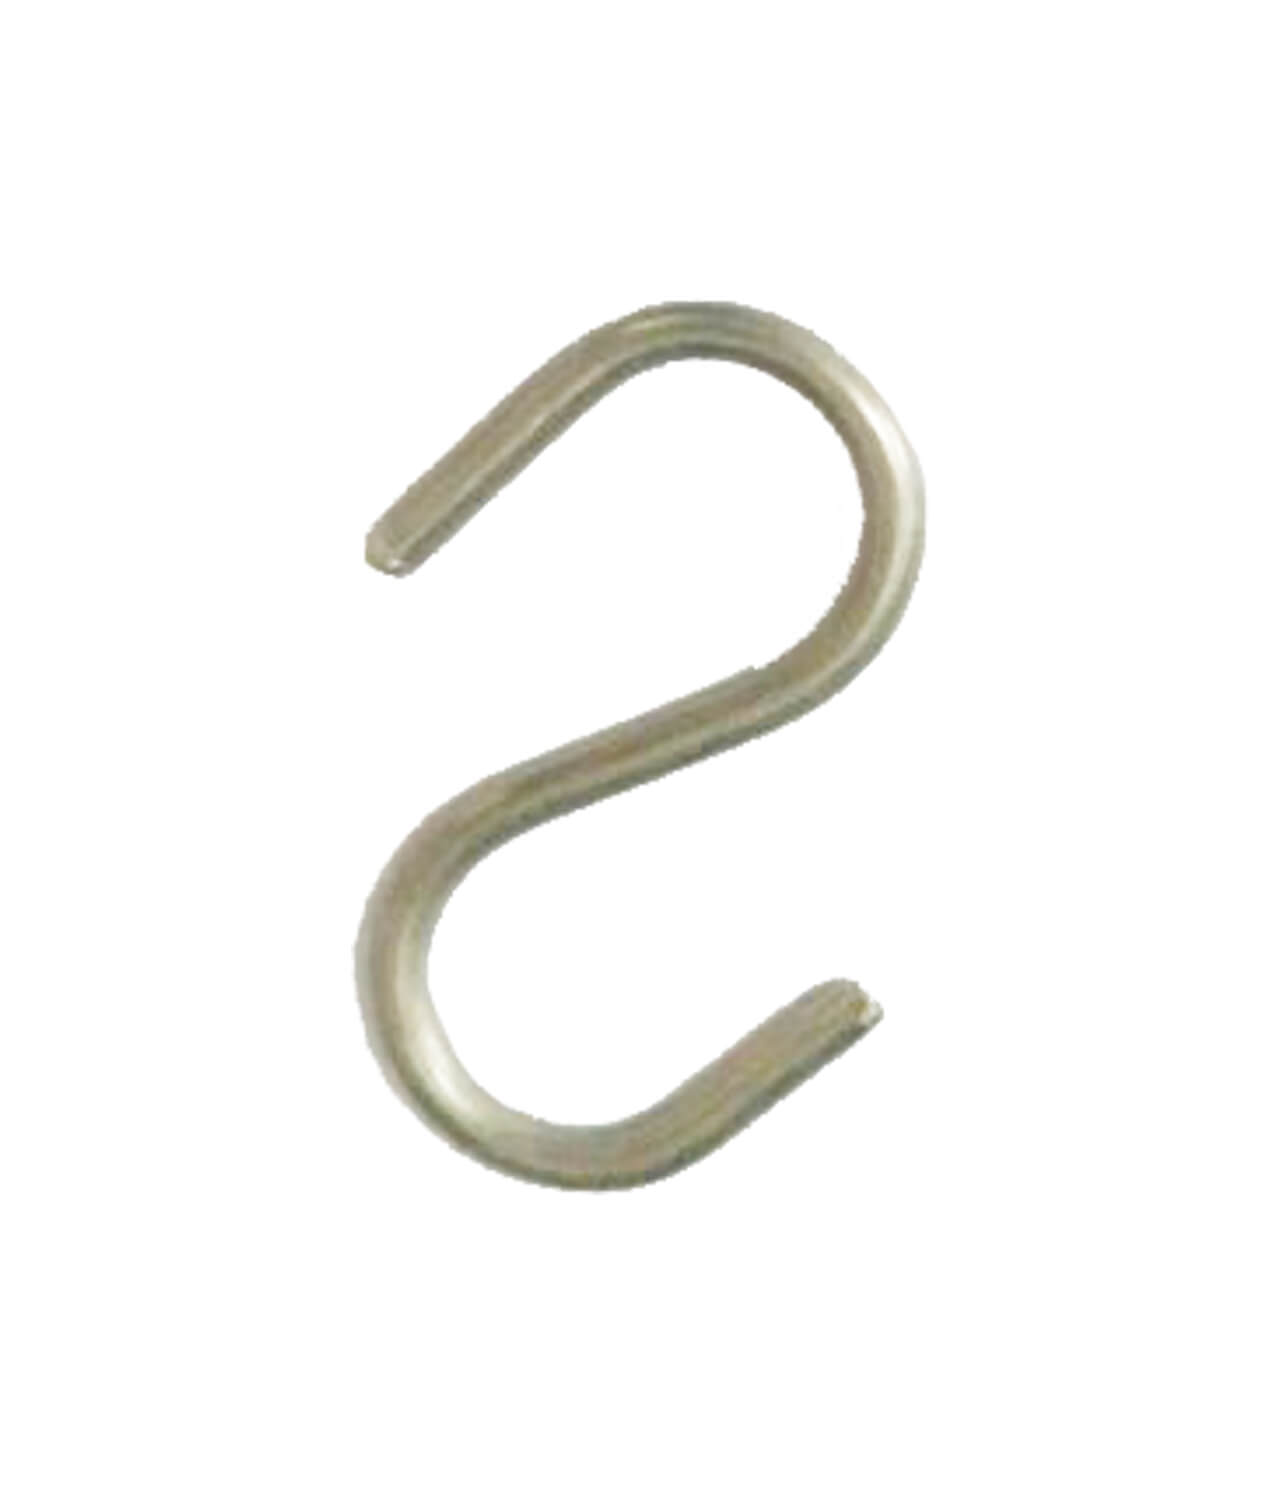 2 Inch stainless steel S-Hook ( 5 Hooks Pack )